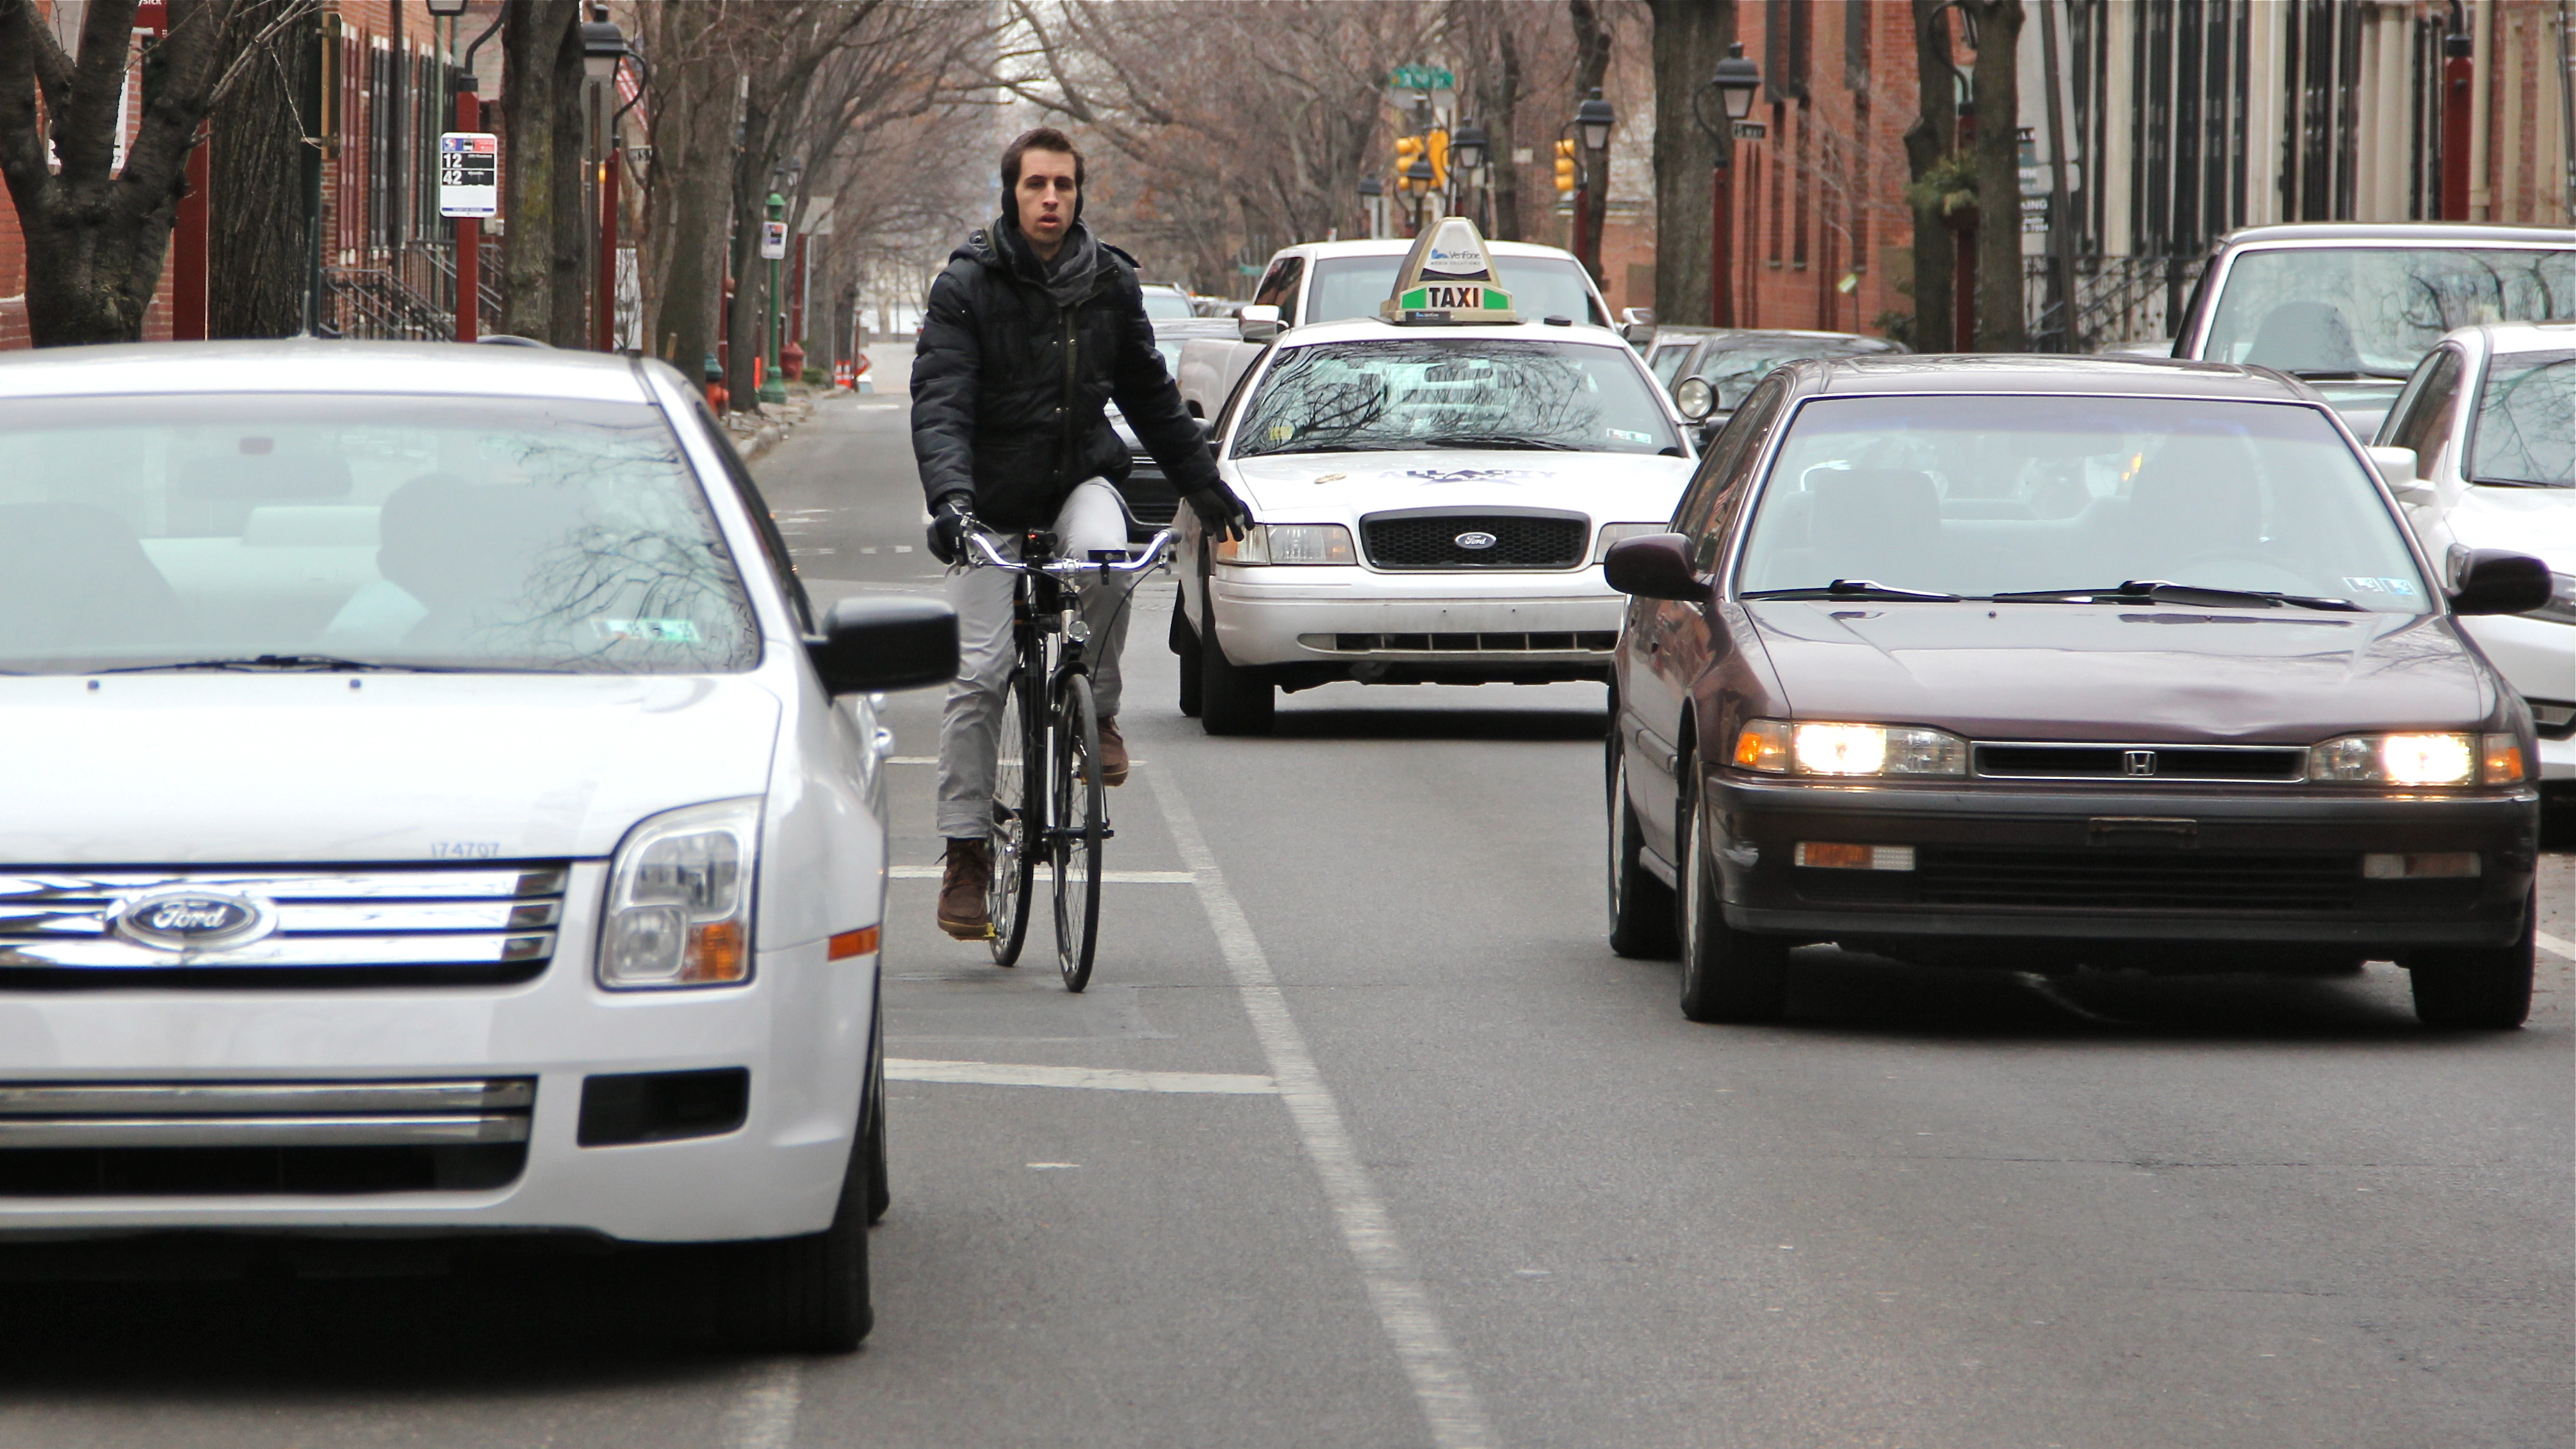 Cars and bikes compete on many Philadelphia streets despite bike lanes. 